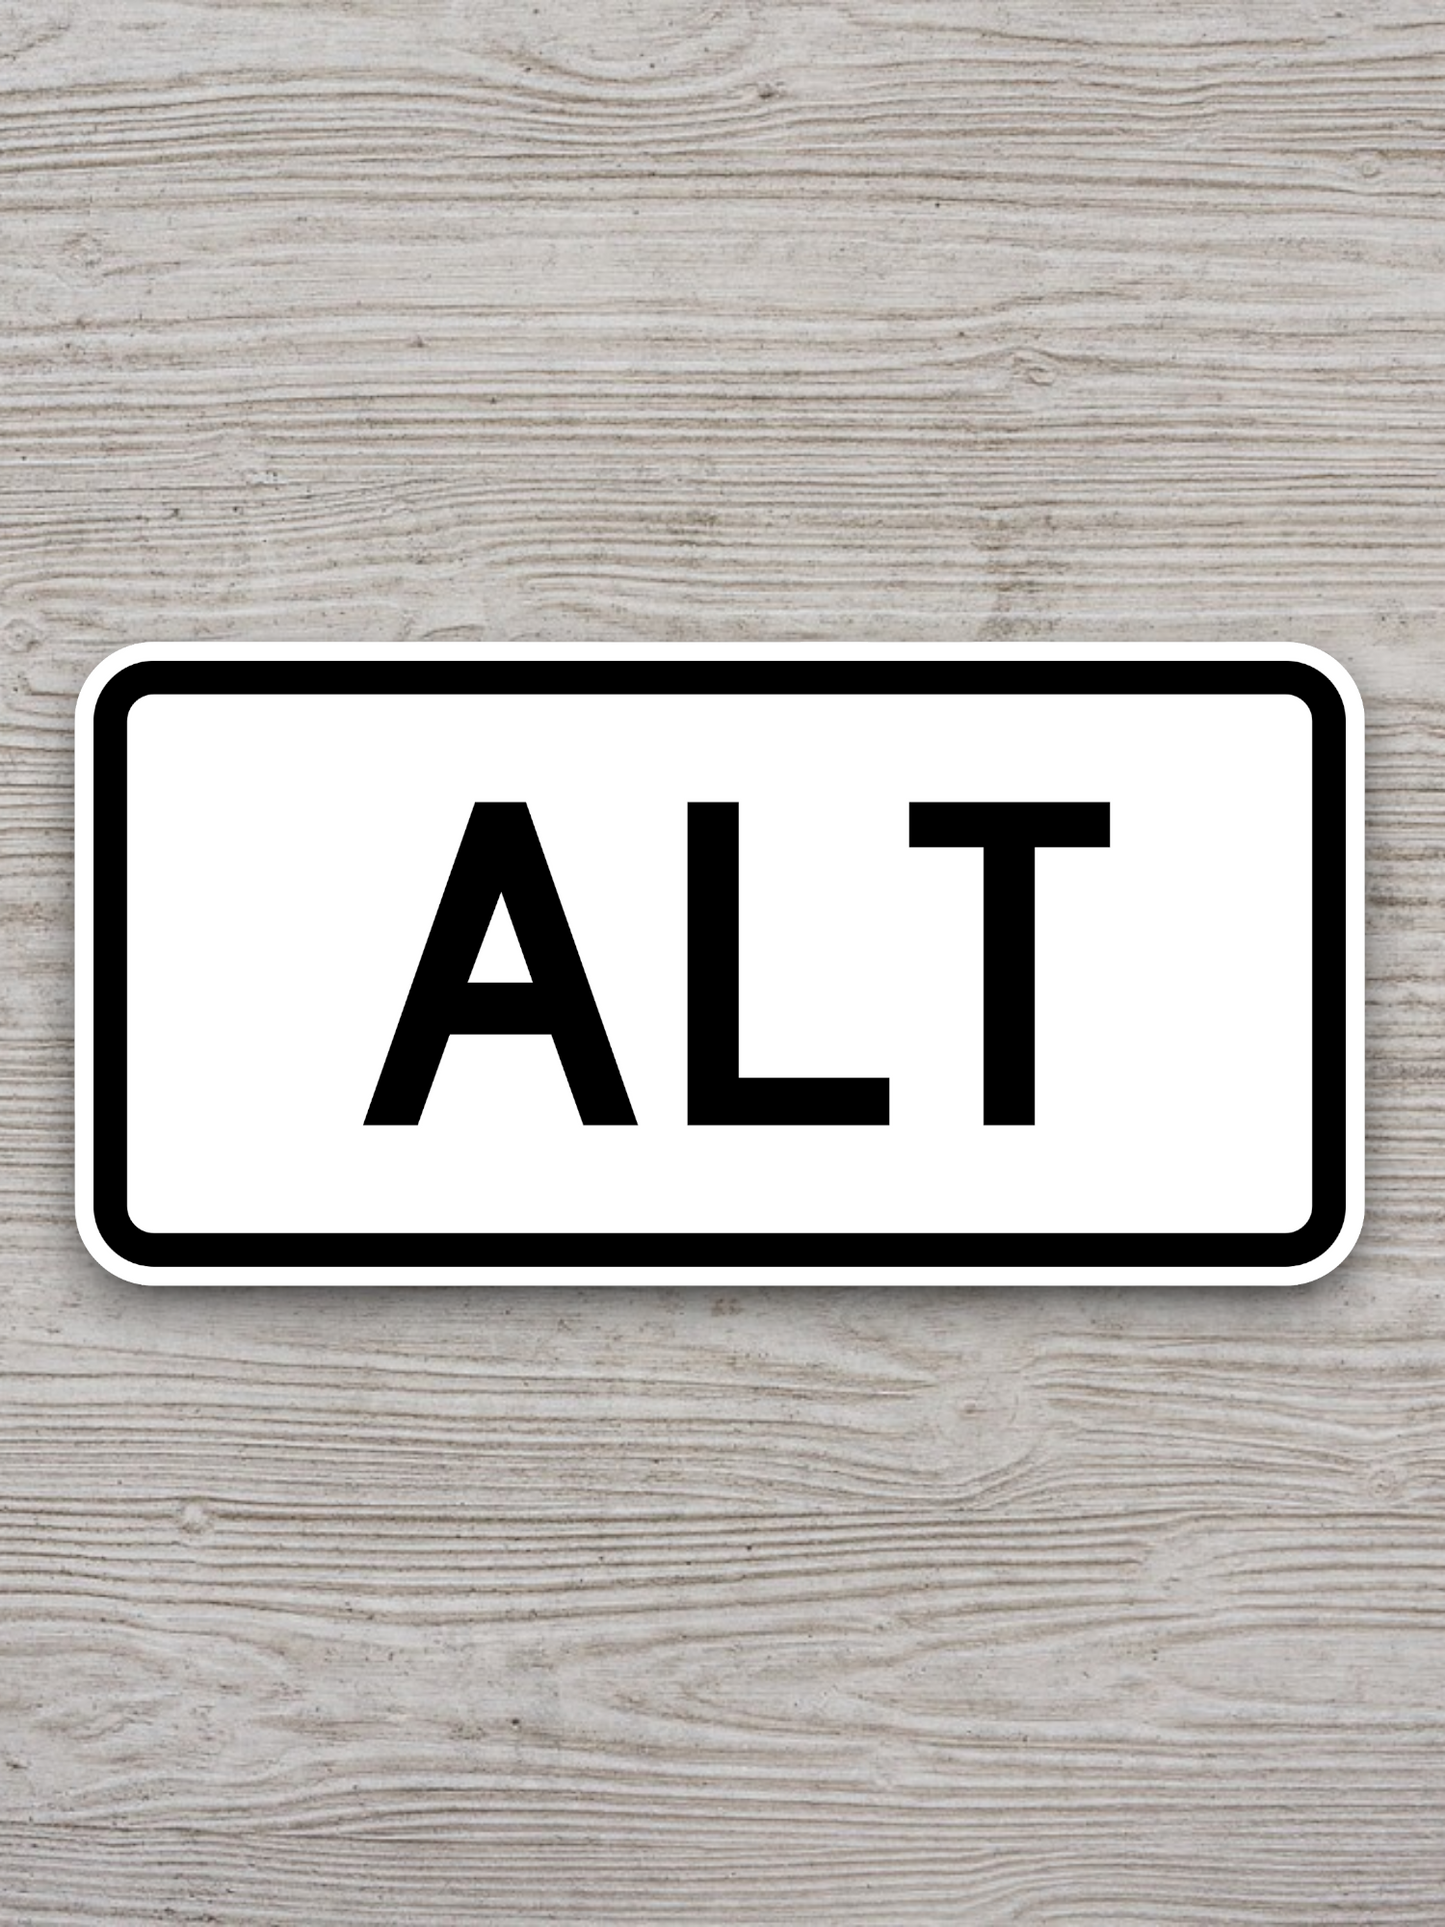 Alt Alternate Road Sign Sticker